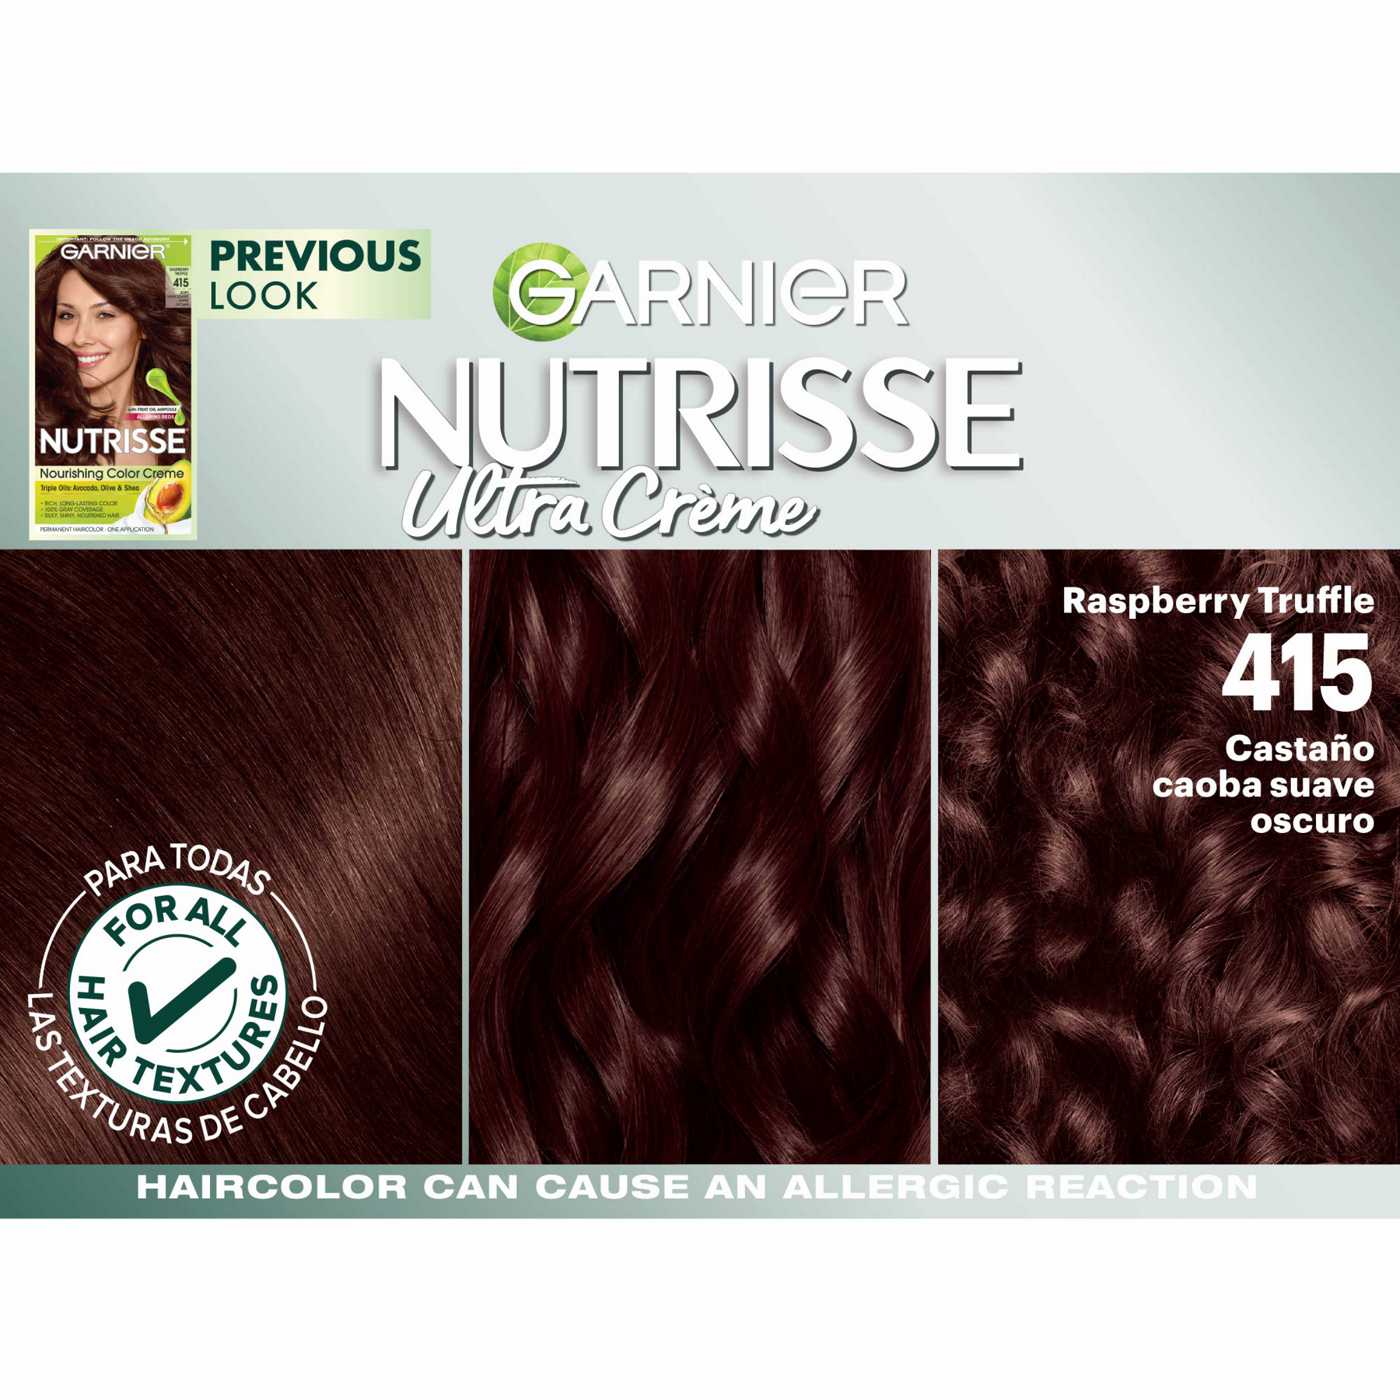 Garnier Nutrisse Nourishing Hair Color Creme - 415 Soft Mahogany Drk Brown (Raspberry Truffle); image 16 of 16